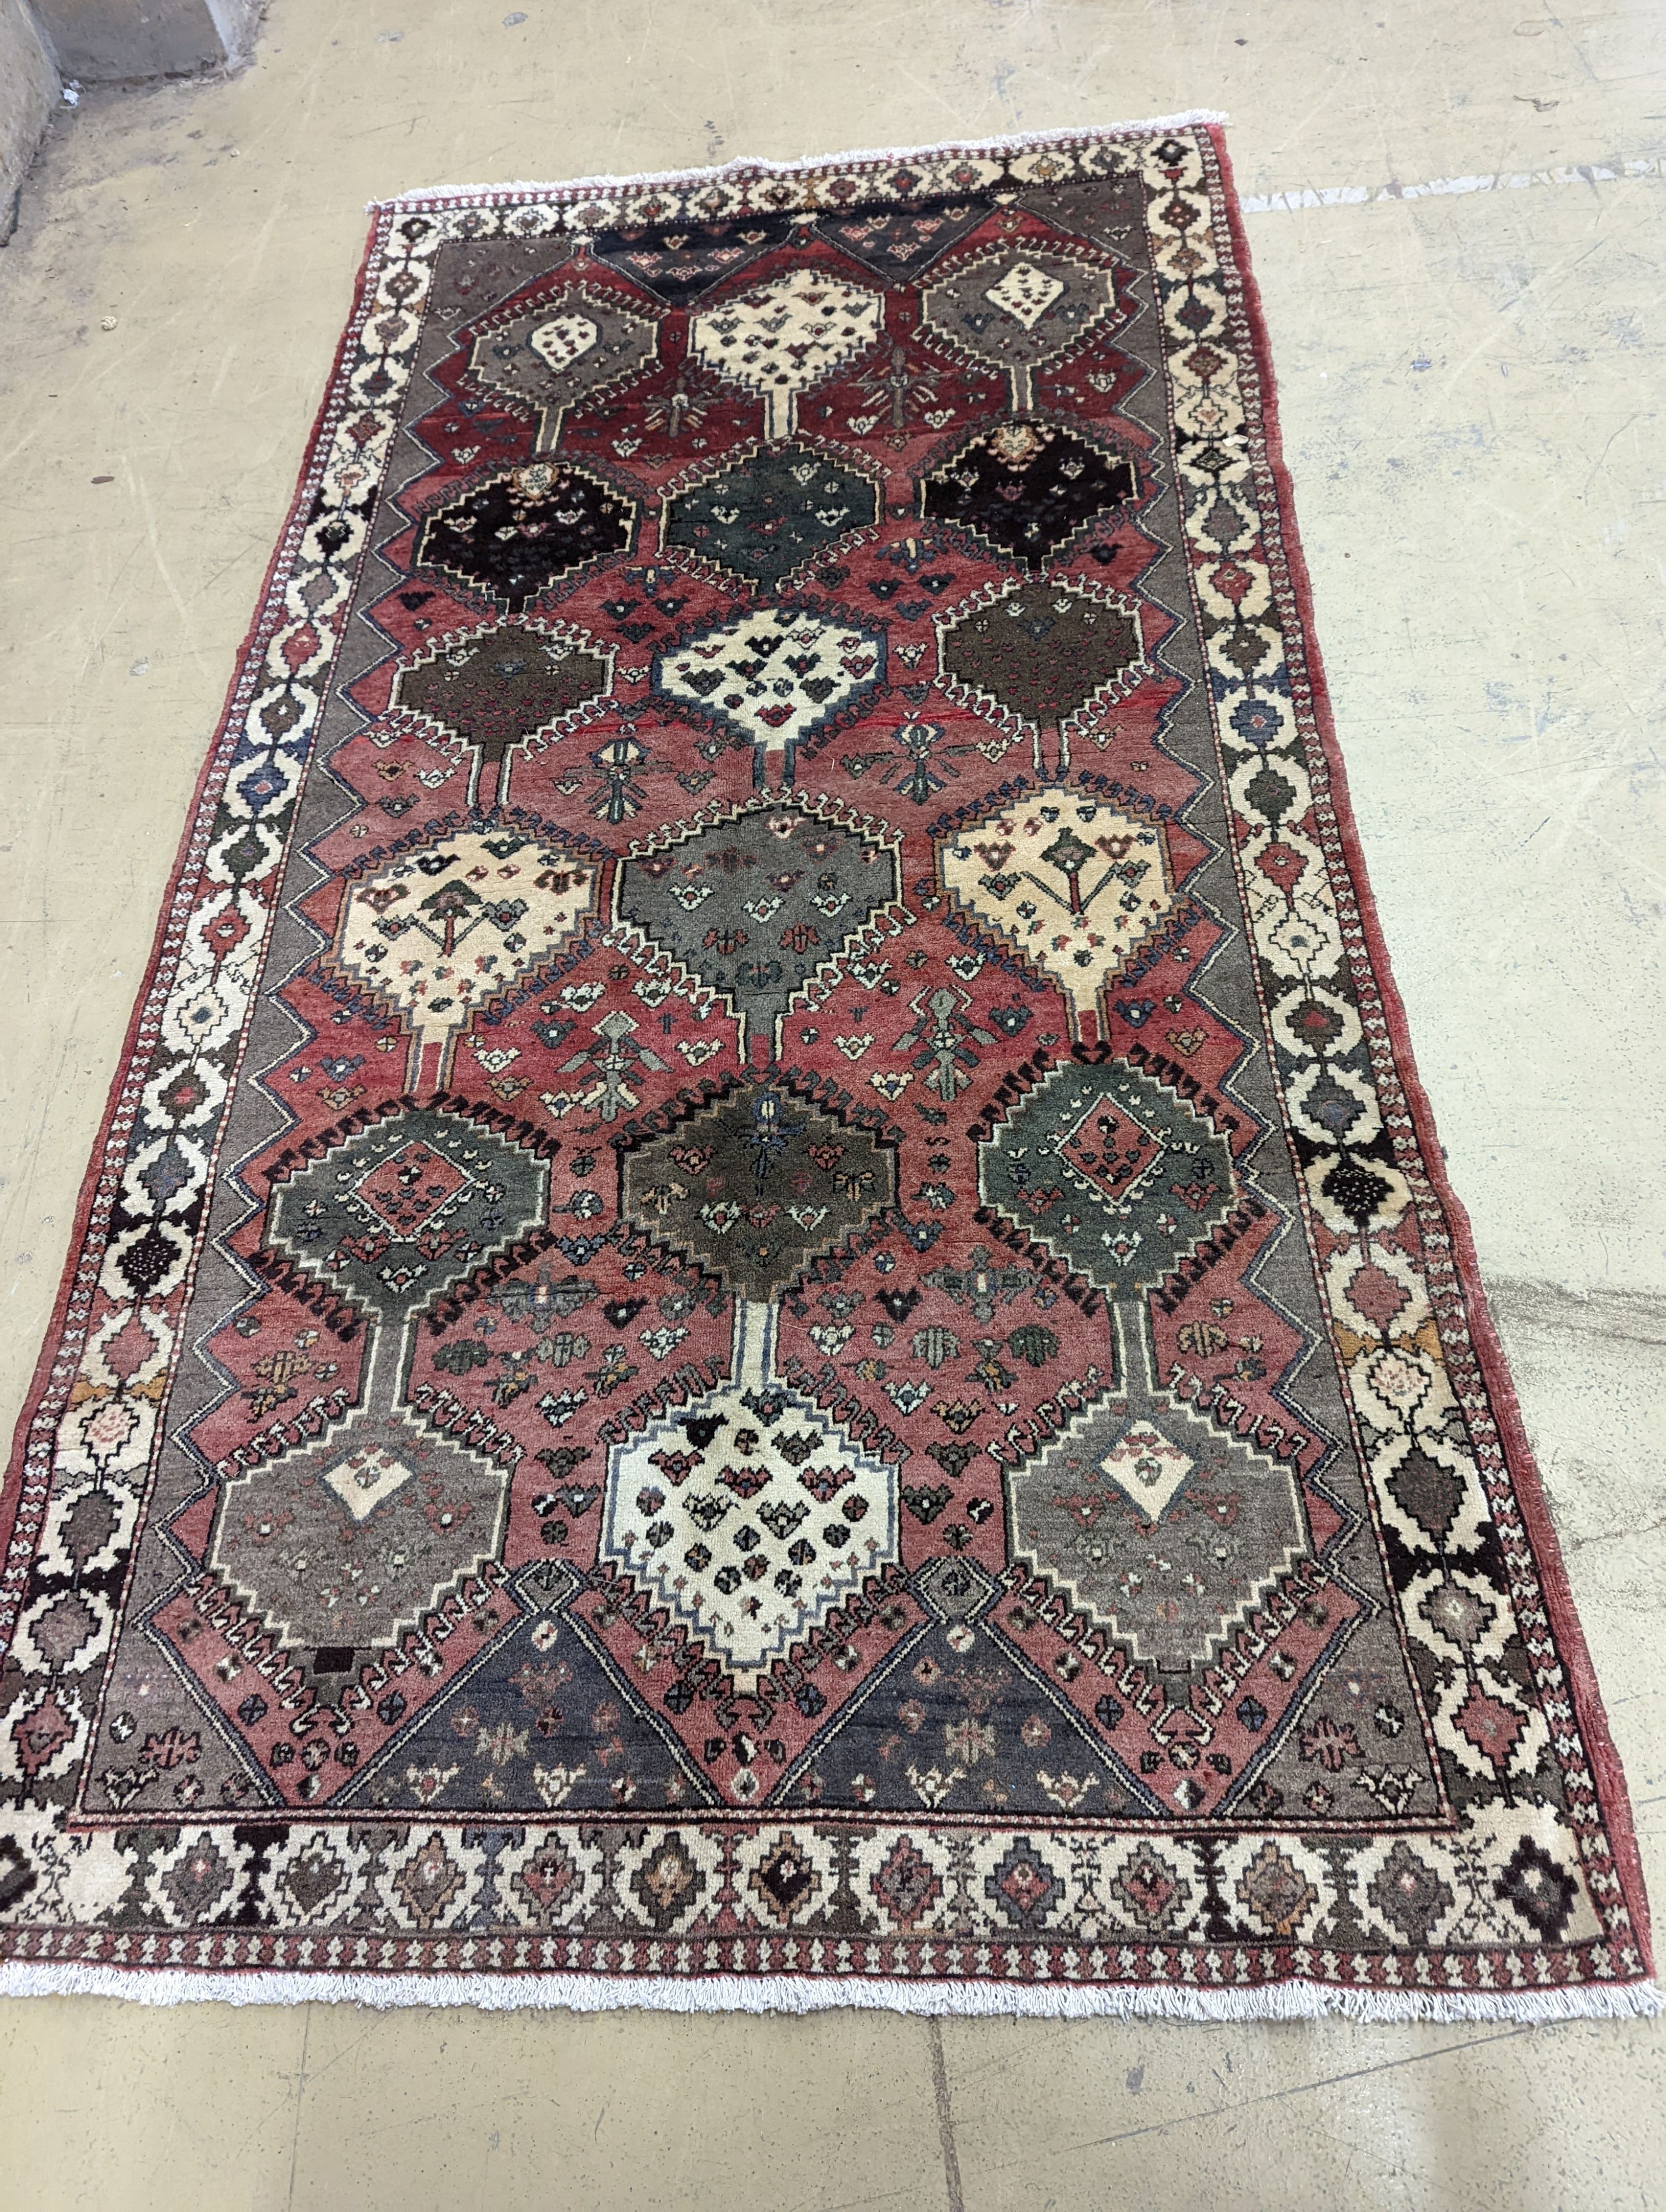 A Persian Shiraz red ground rug, 280 x 150cm